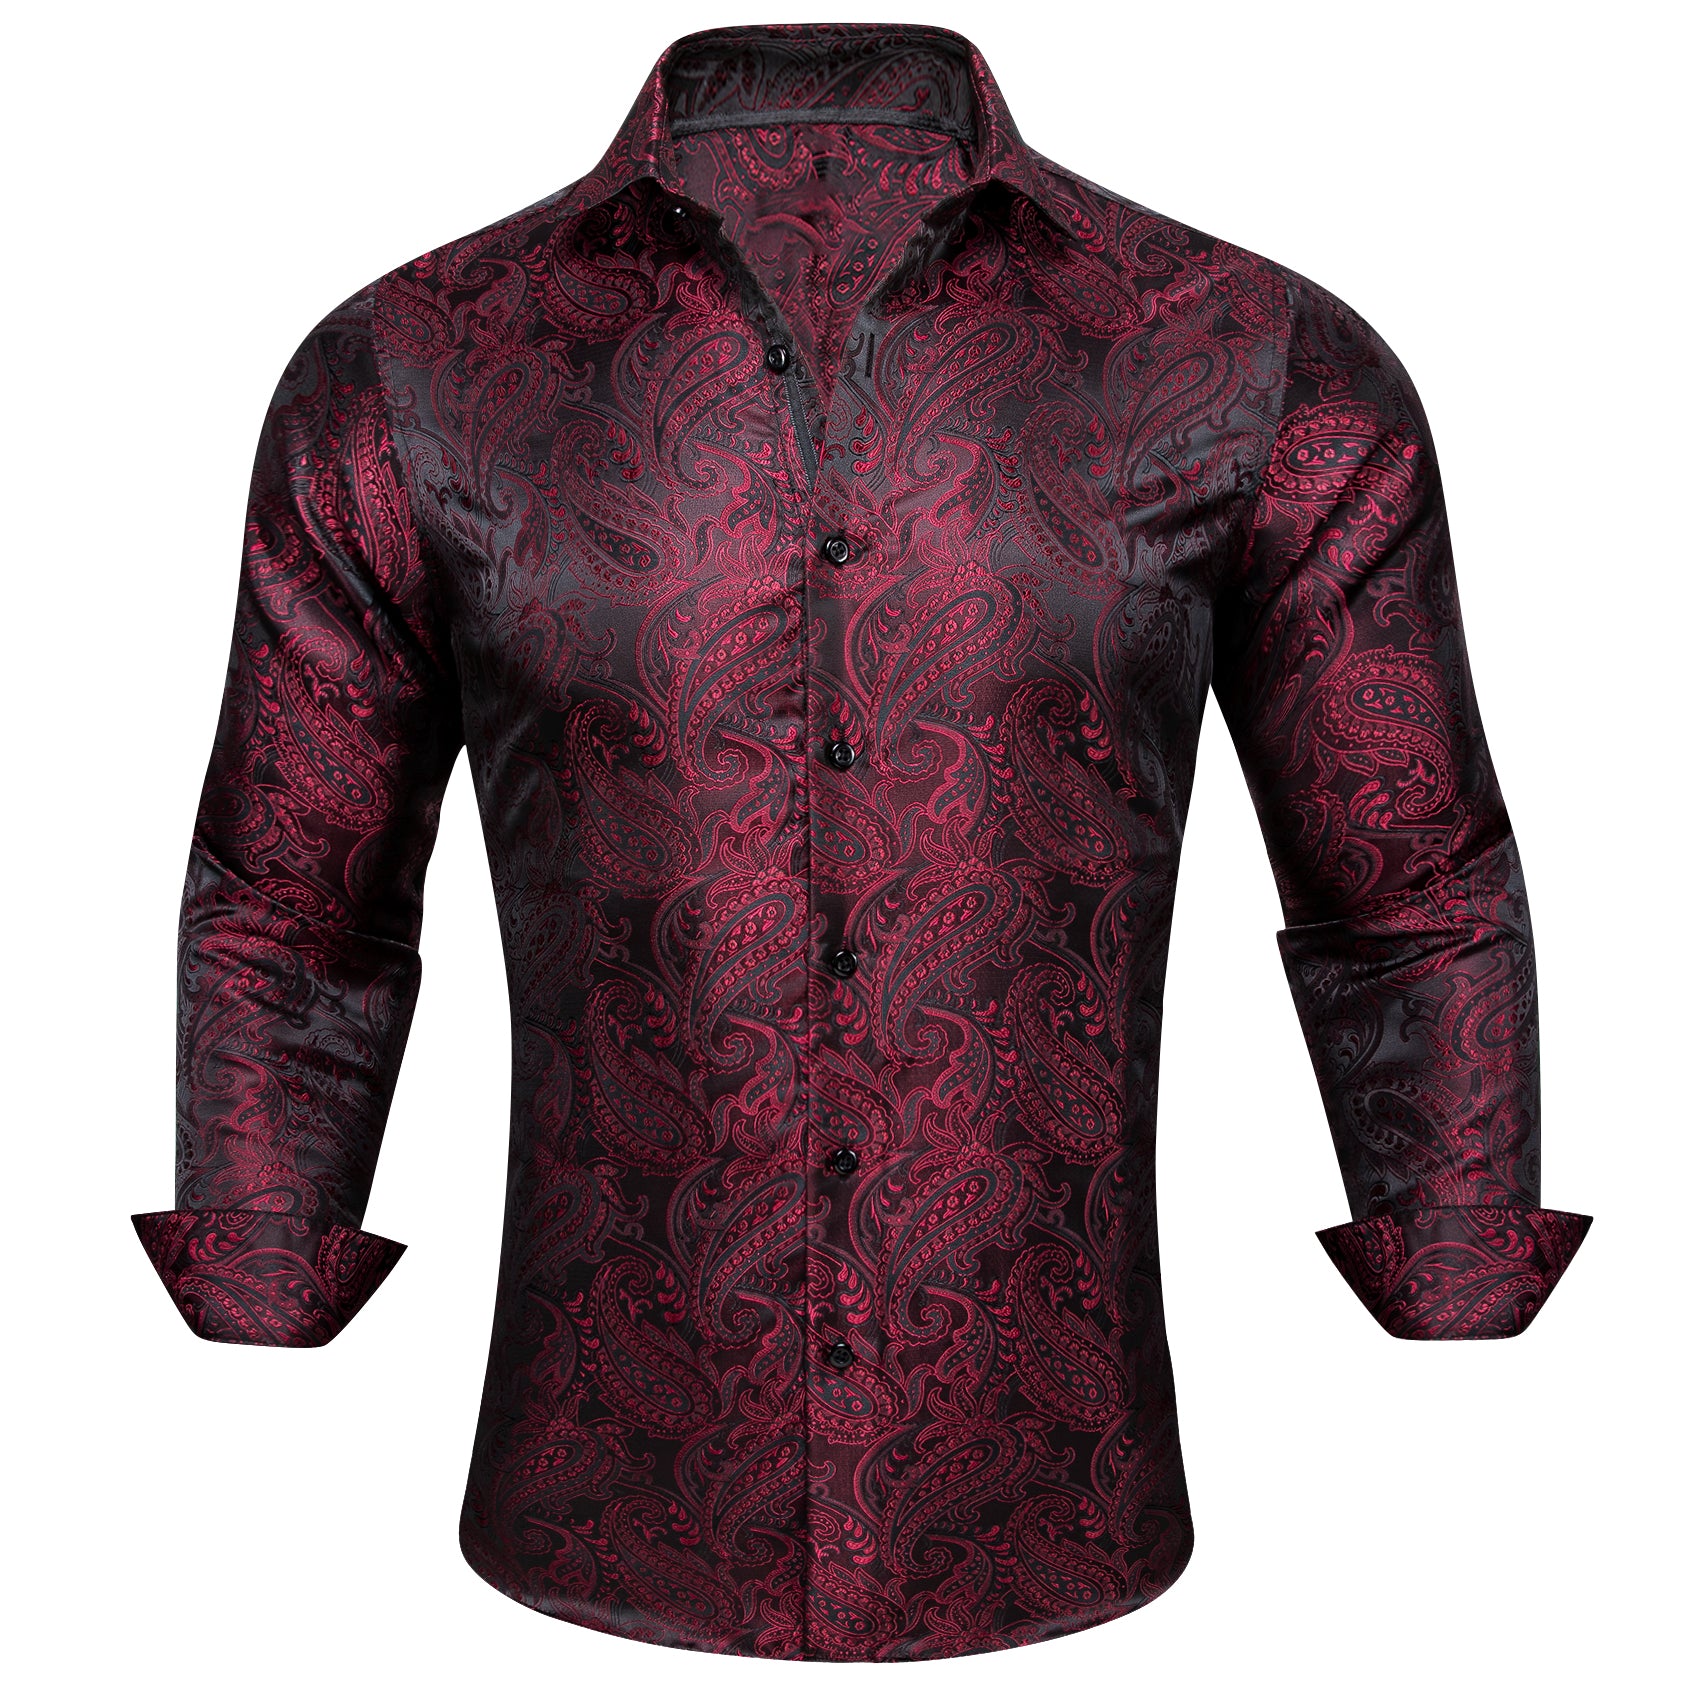 Barry.wang Red Black Paisley Silk Men's Shirt